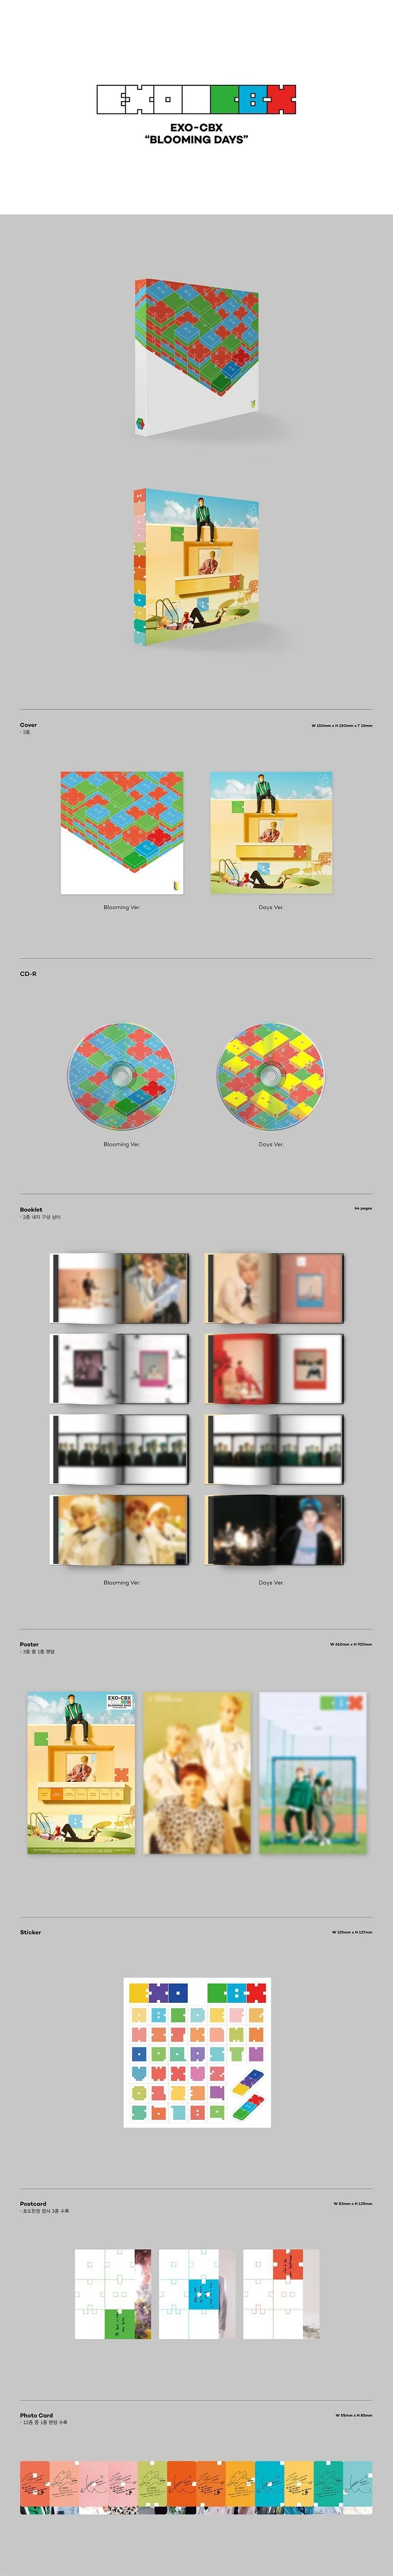 [MYKPOP] ~ 100% Официальный оригинал ~ EXO CBX MINI #2: цветущие дни альбом CD, KPOP Fans Коллекция-SA19081703